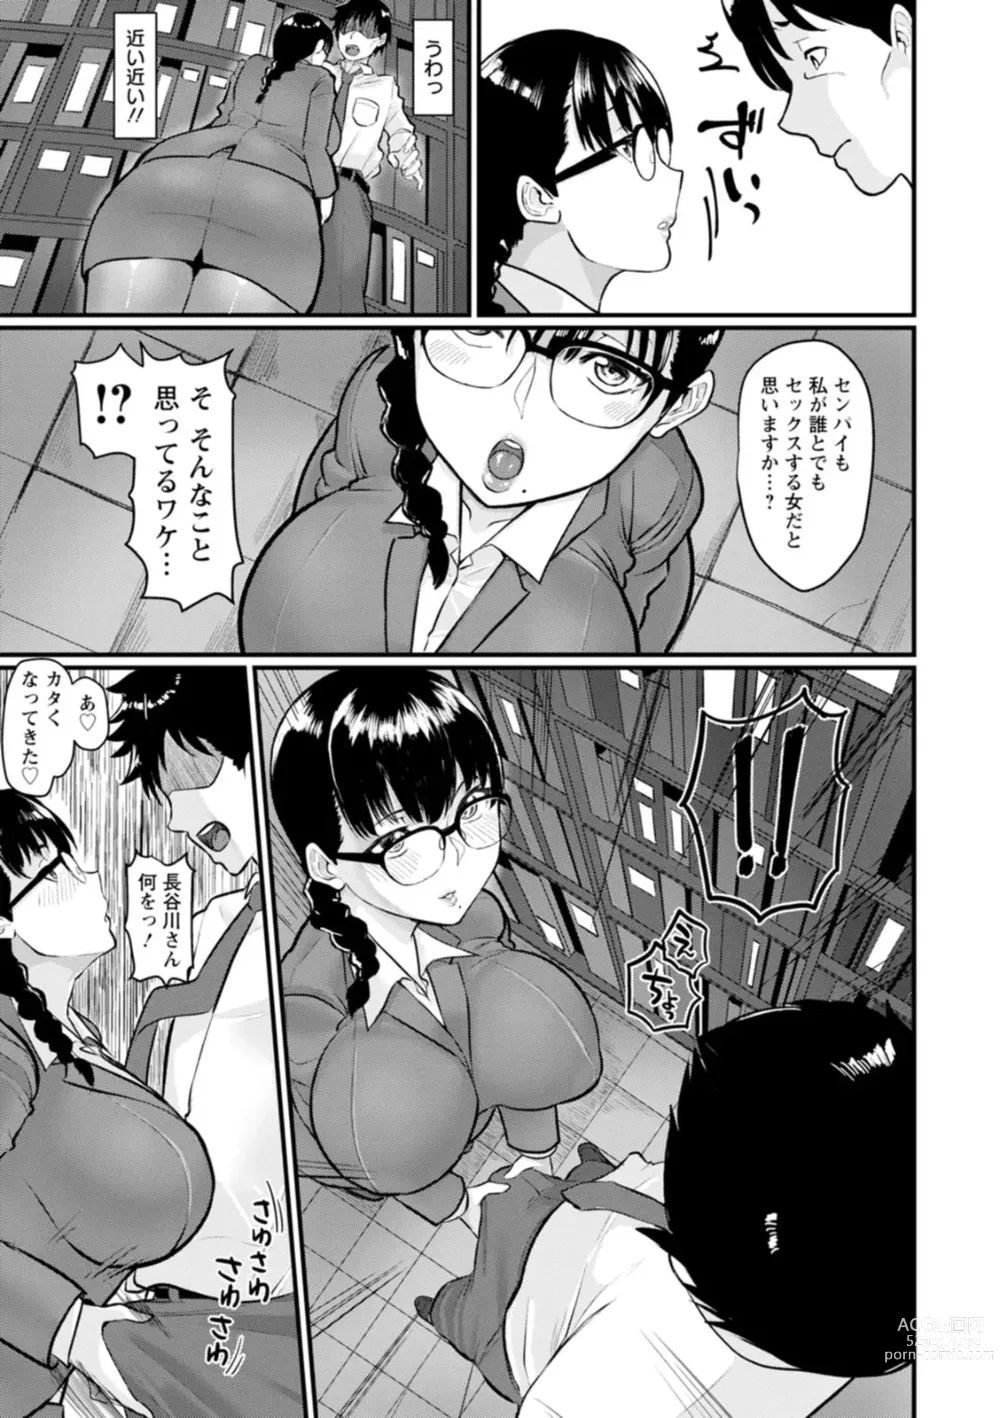 Page 7 of manga Anakoi Otome